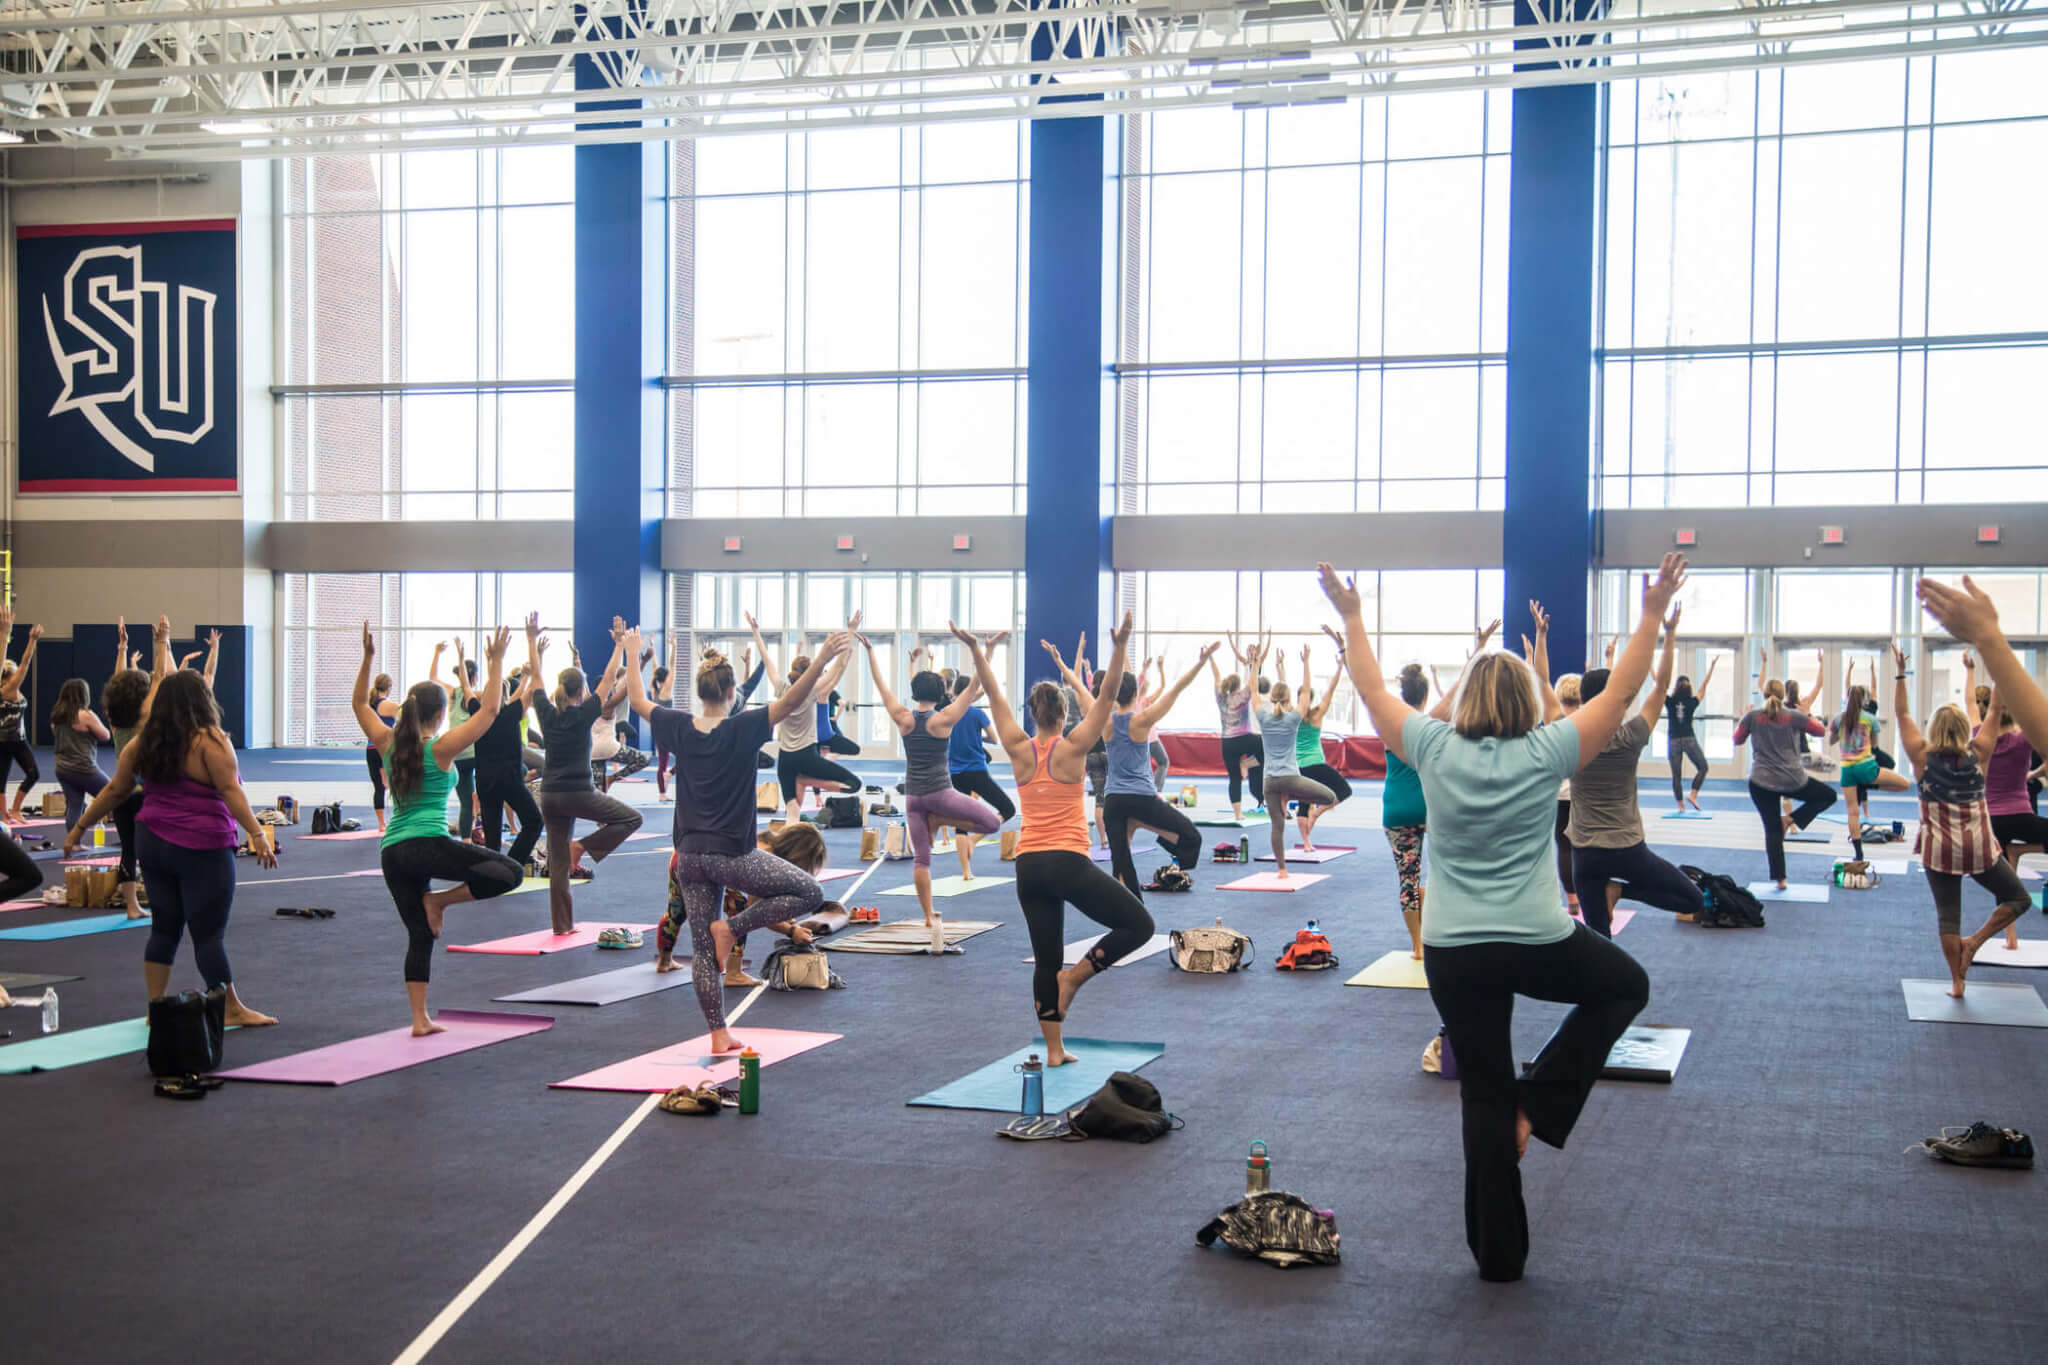 Mindful Morning Returns to Shenandoah University Event offers yoga, pilates, meditation and wellness vendors